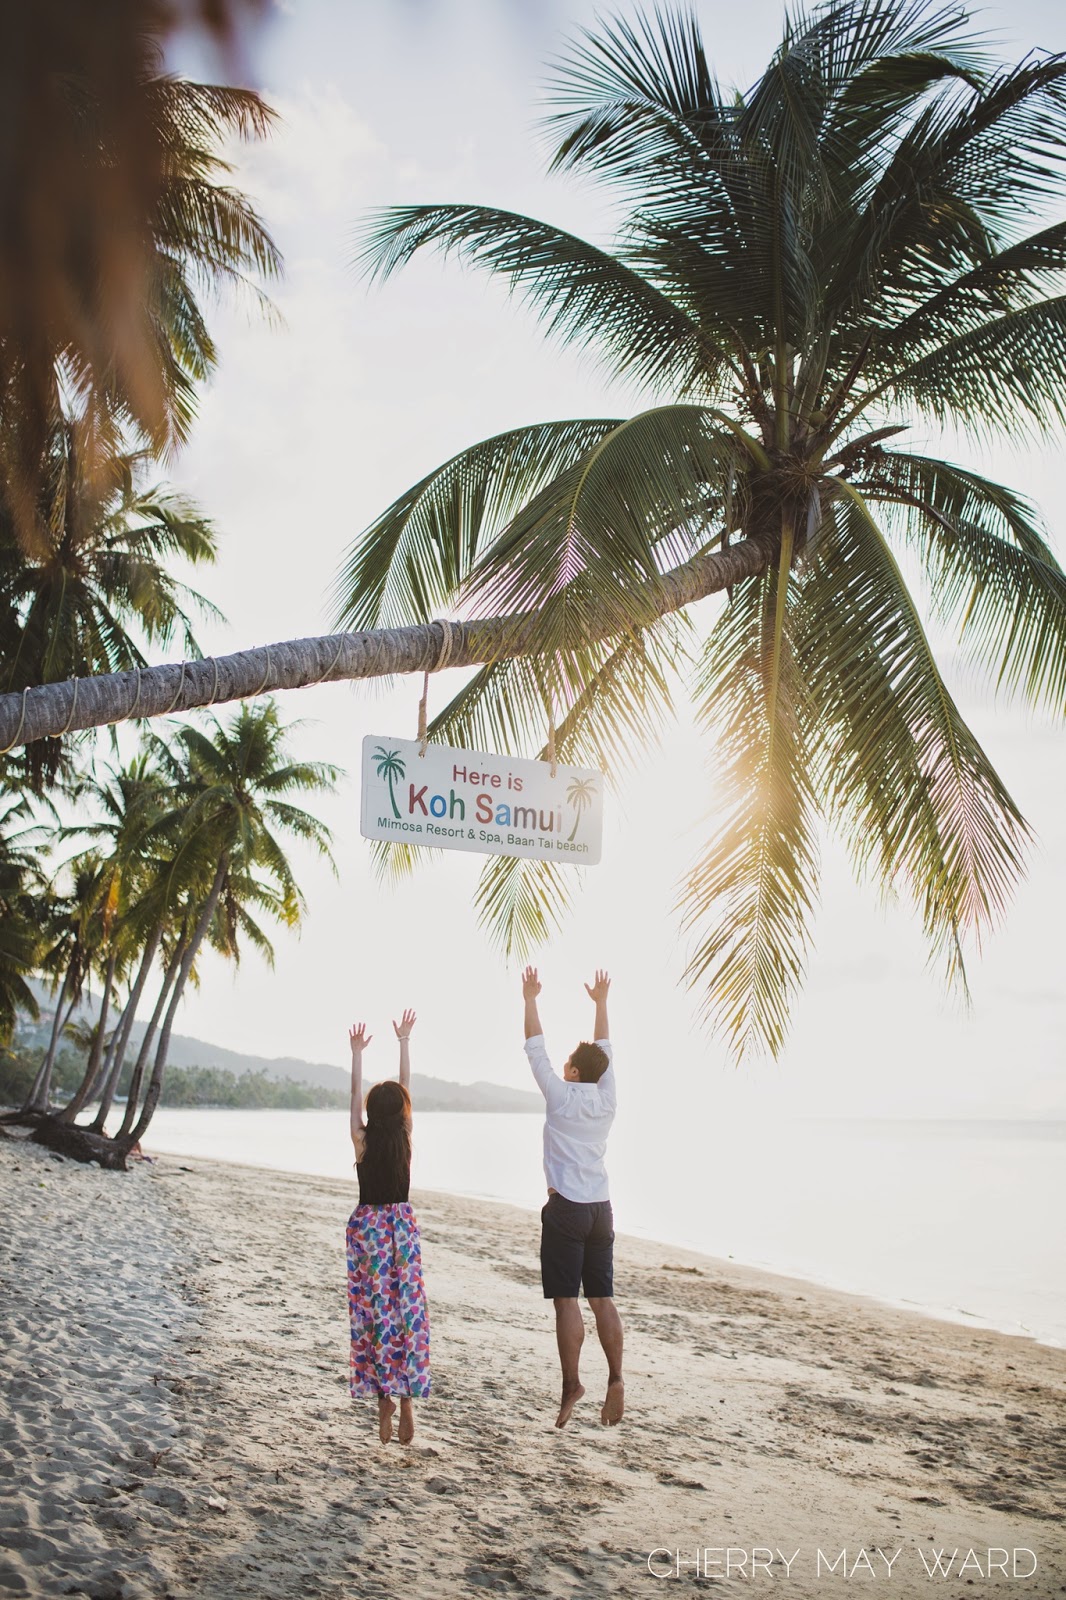 Here is Koh Samui sign, Ban Tai beach, fun engagement photos, couple jumping on the beach, Thailand